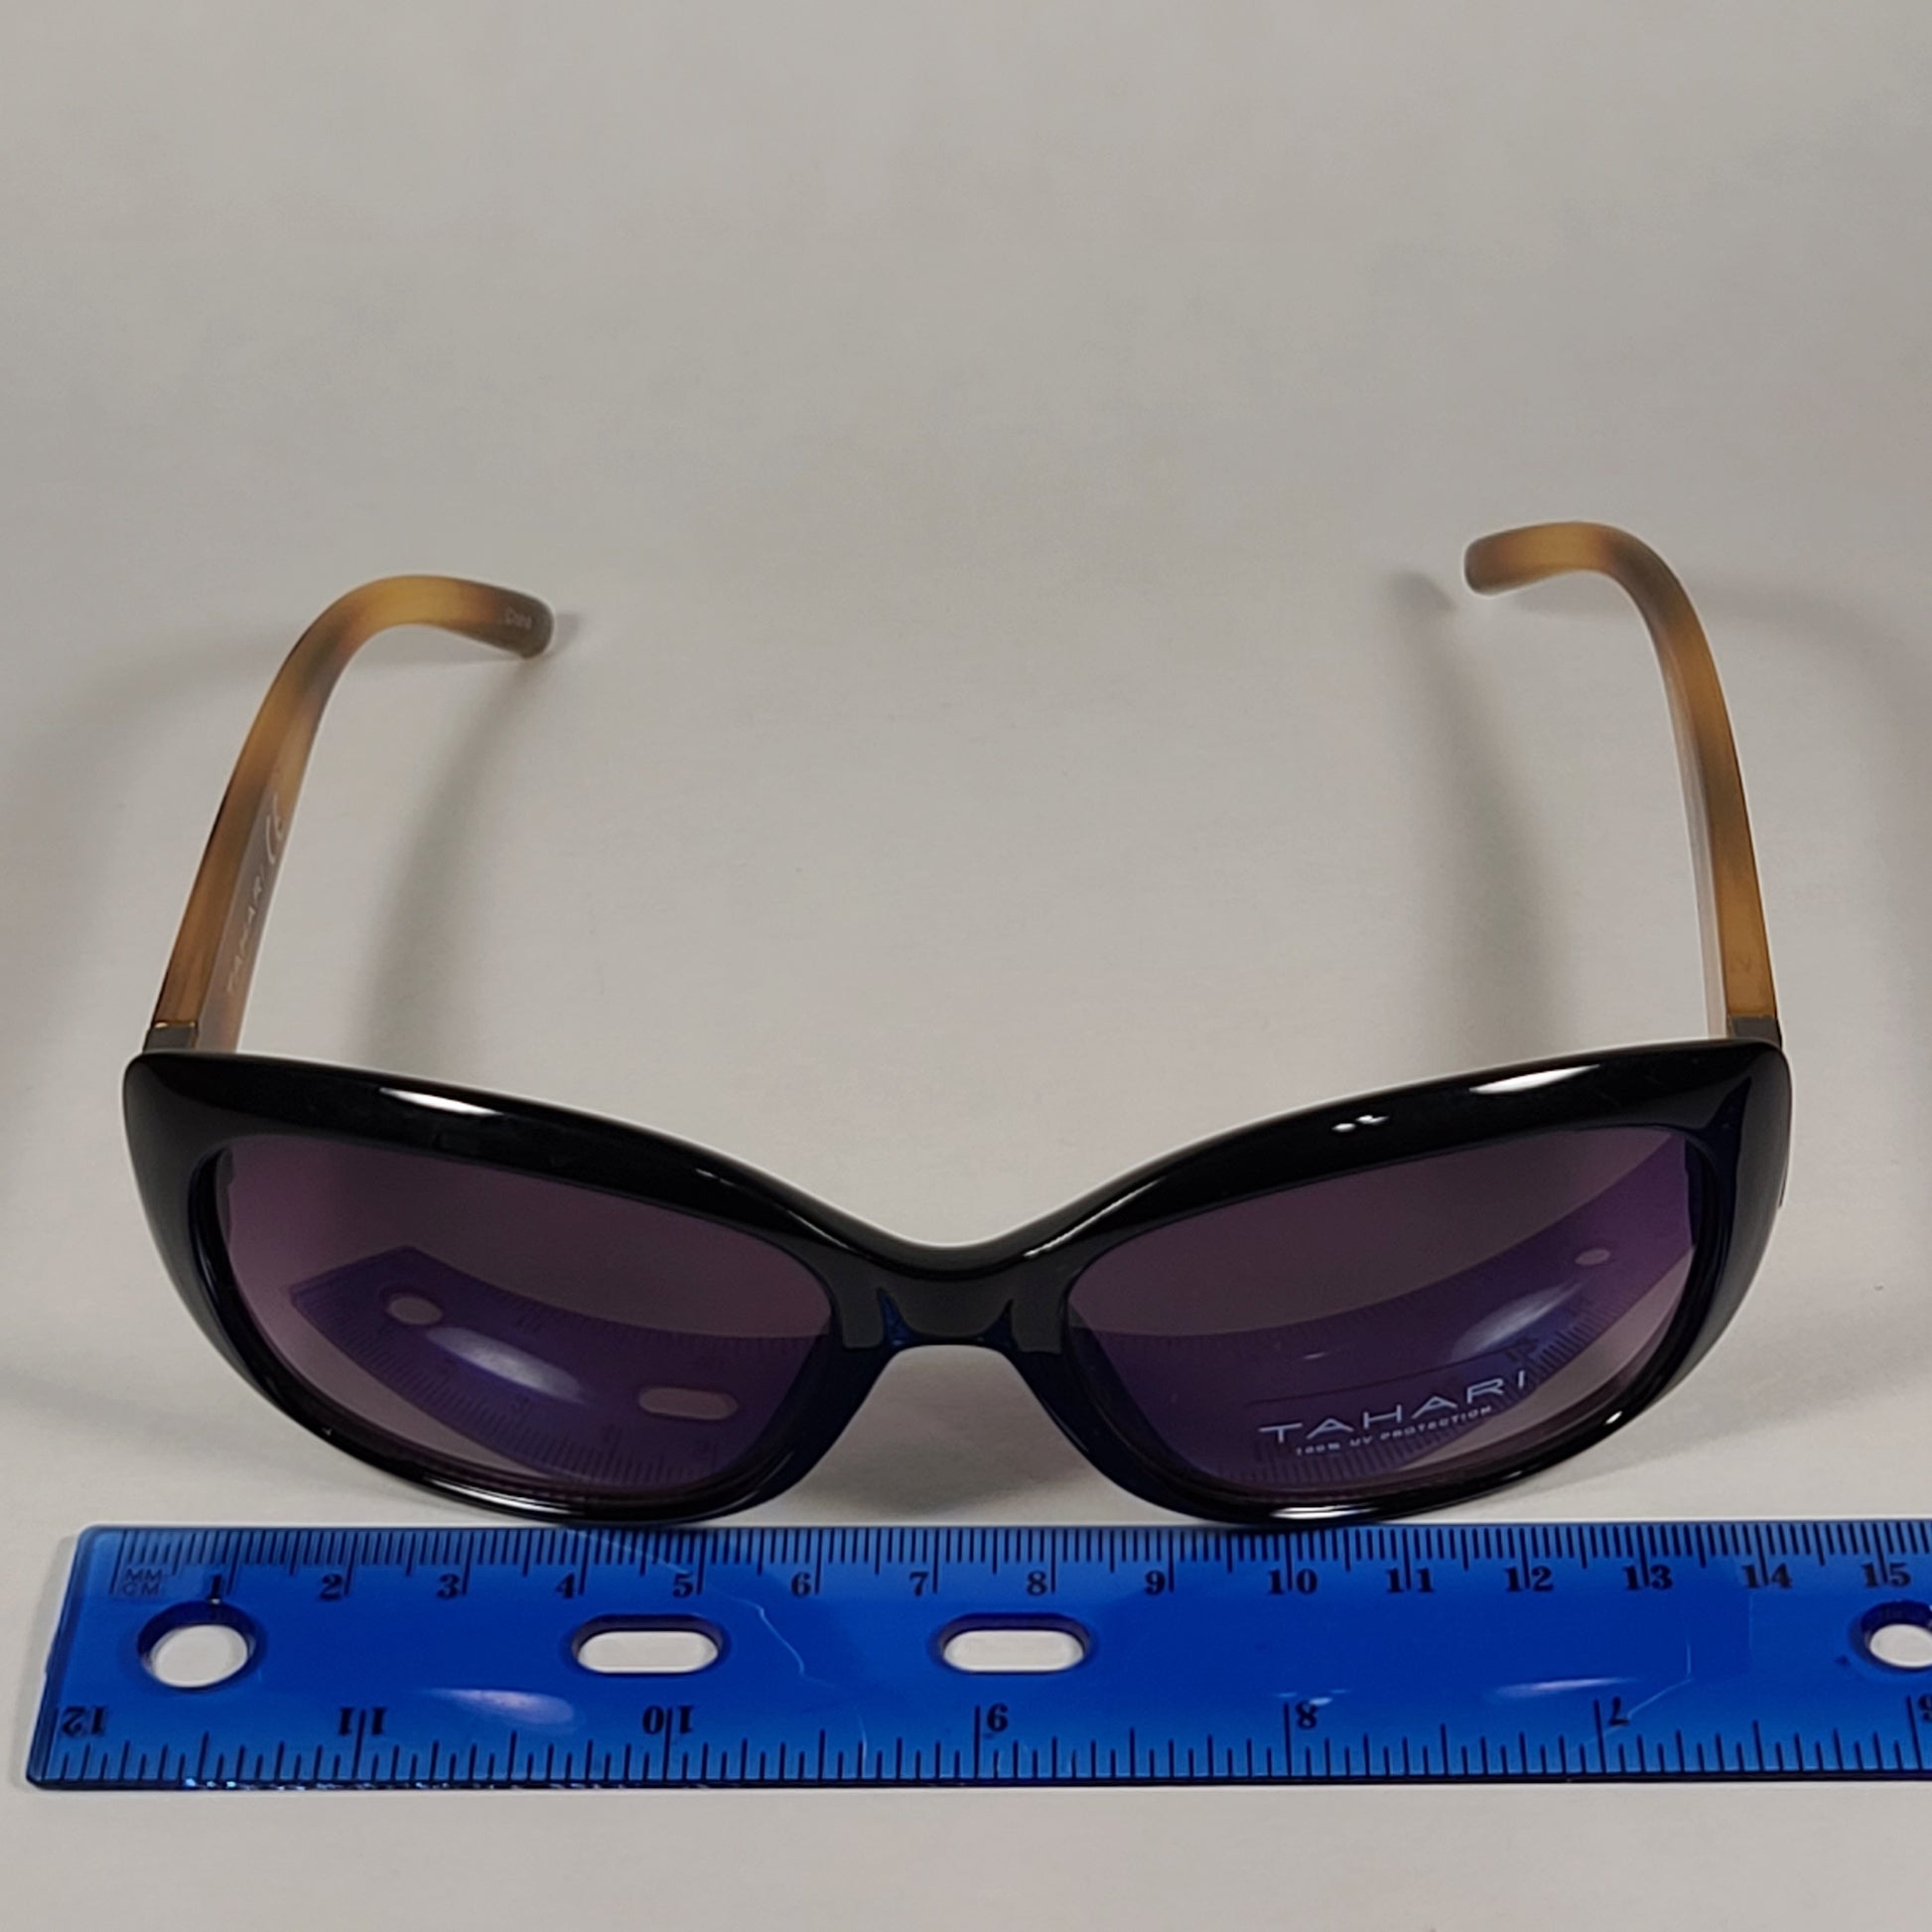 Tahari Oval Sunglasses Black And Light Havana Frame Rhinestone Temples Smoke Lens TH754 OX - Sunglasses